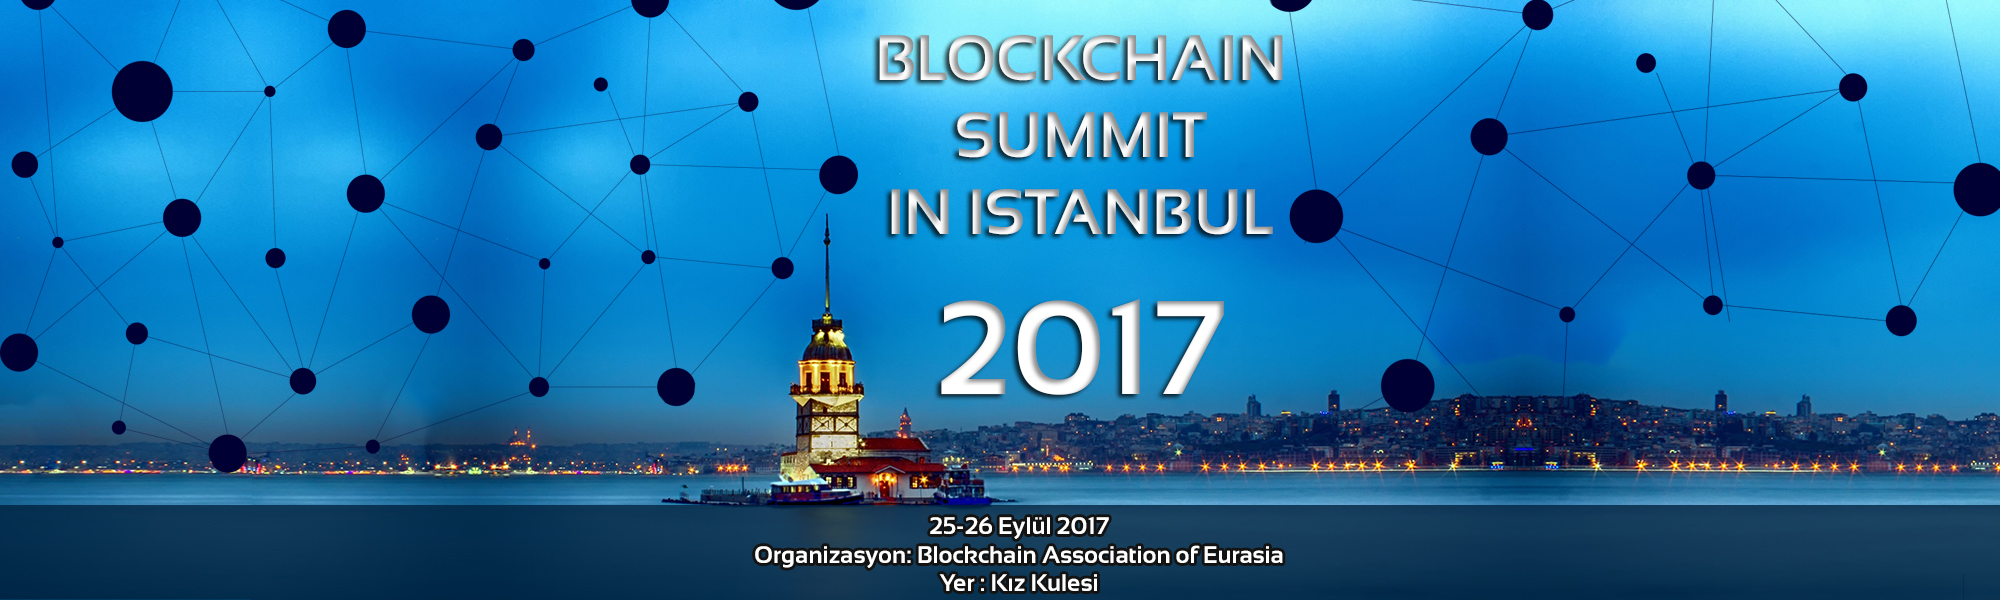 blockchain-summit-istanbul-etkinligi